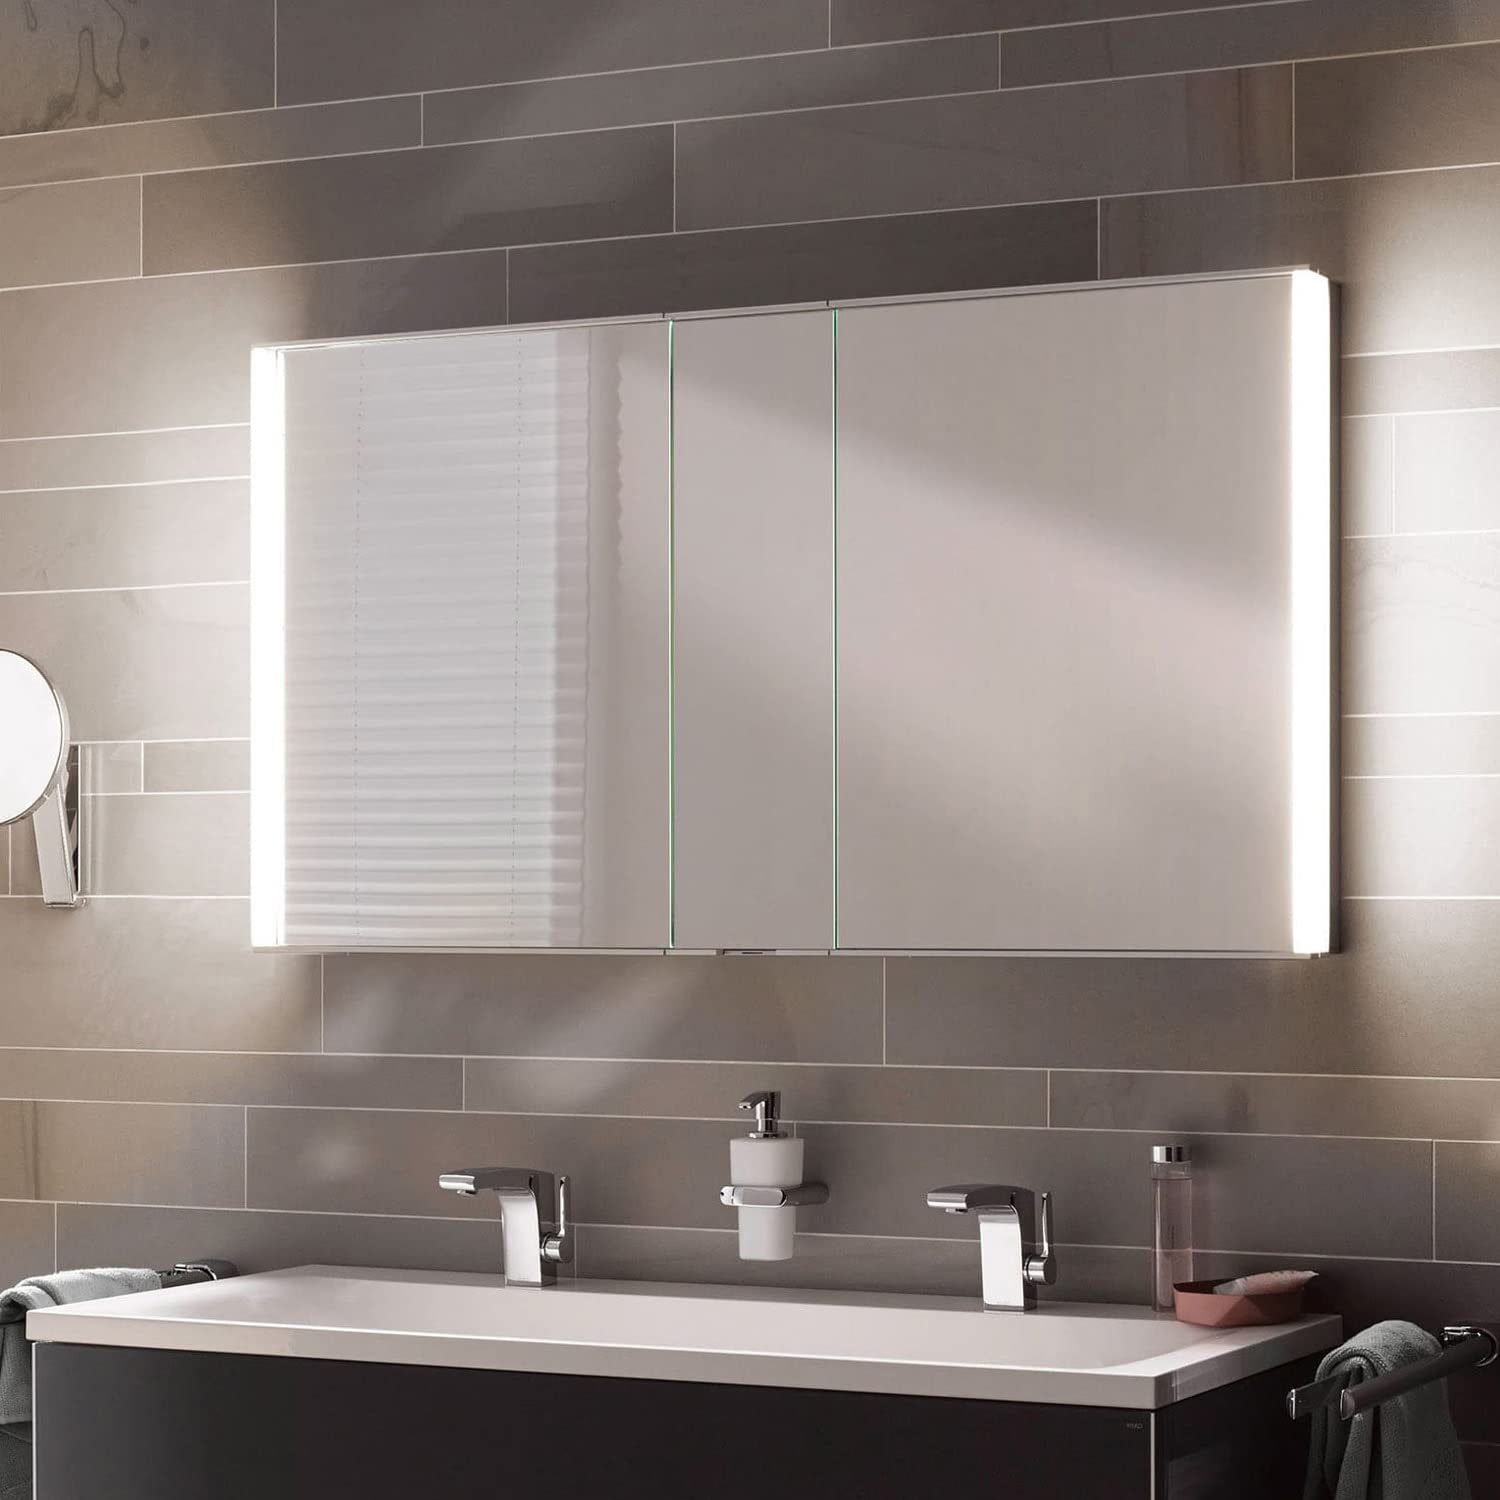 Keuco Spiegelschrank Royal Match (Badezimmerspiegelschrank mit Beleuchtung LED) Unterputz, LED-Beleuchtung, Aluminium-Korpus, 2 Türen, 120x70x14,9cm